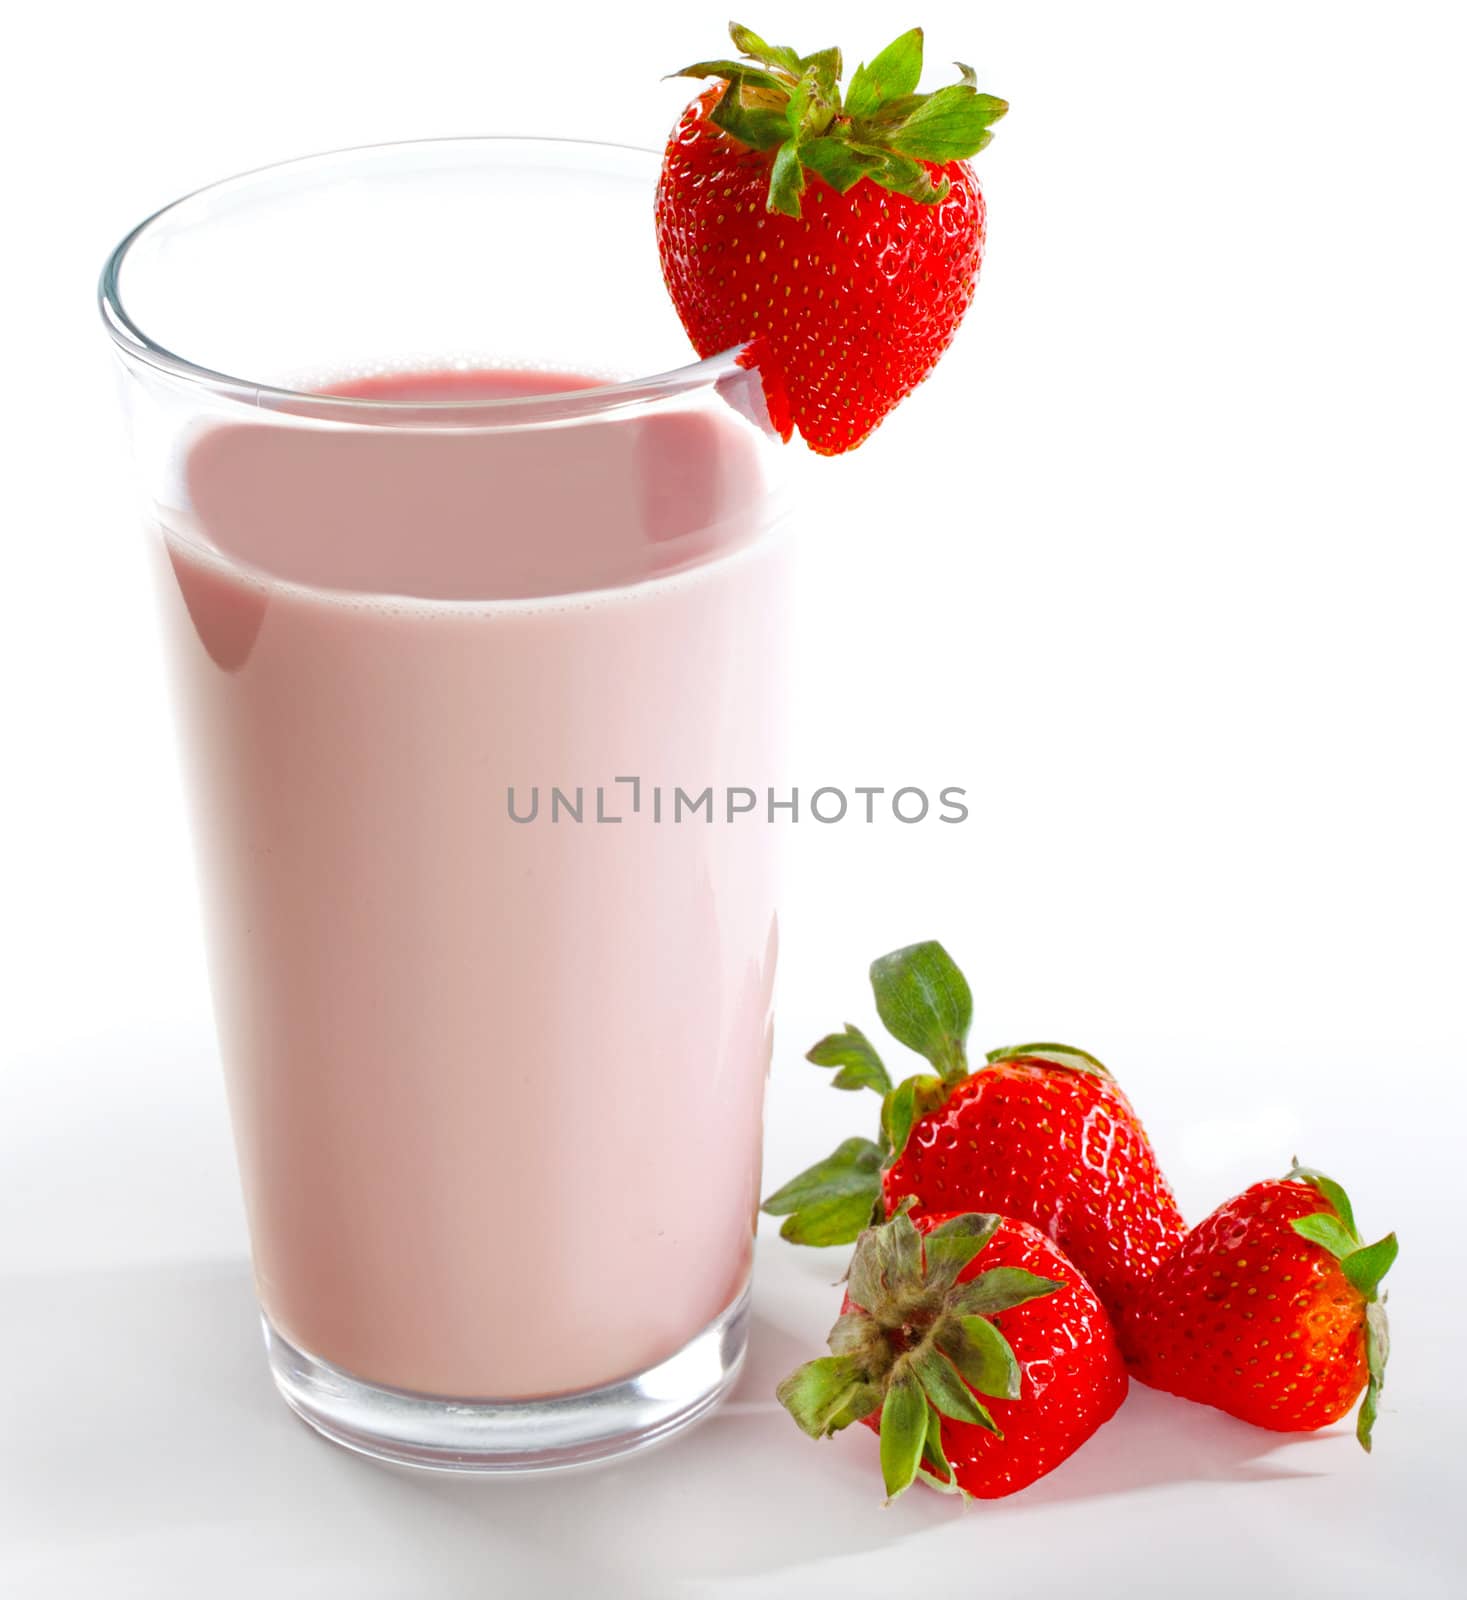 Strawberry milkshake by mereutaandrei